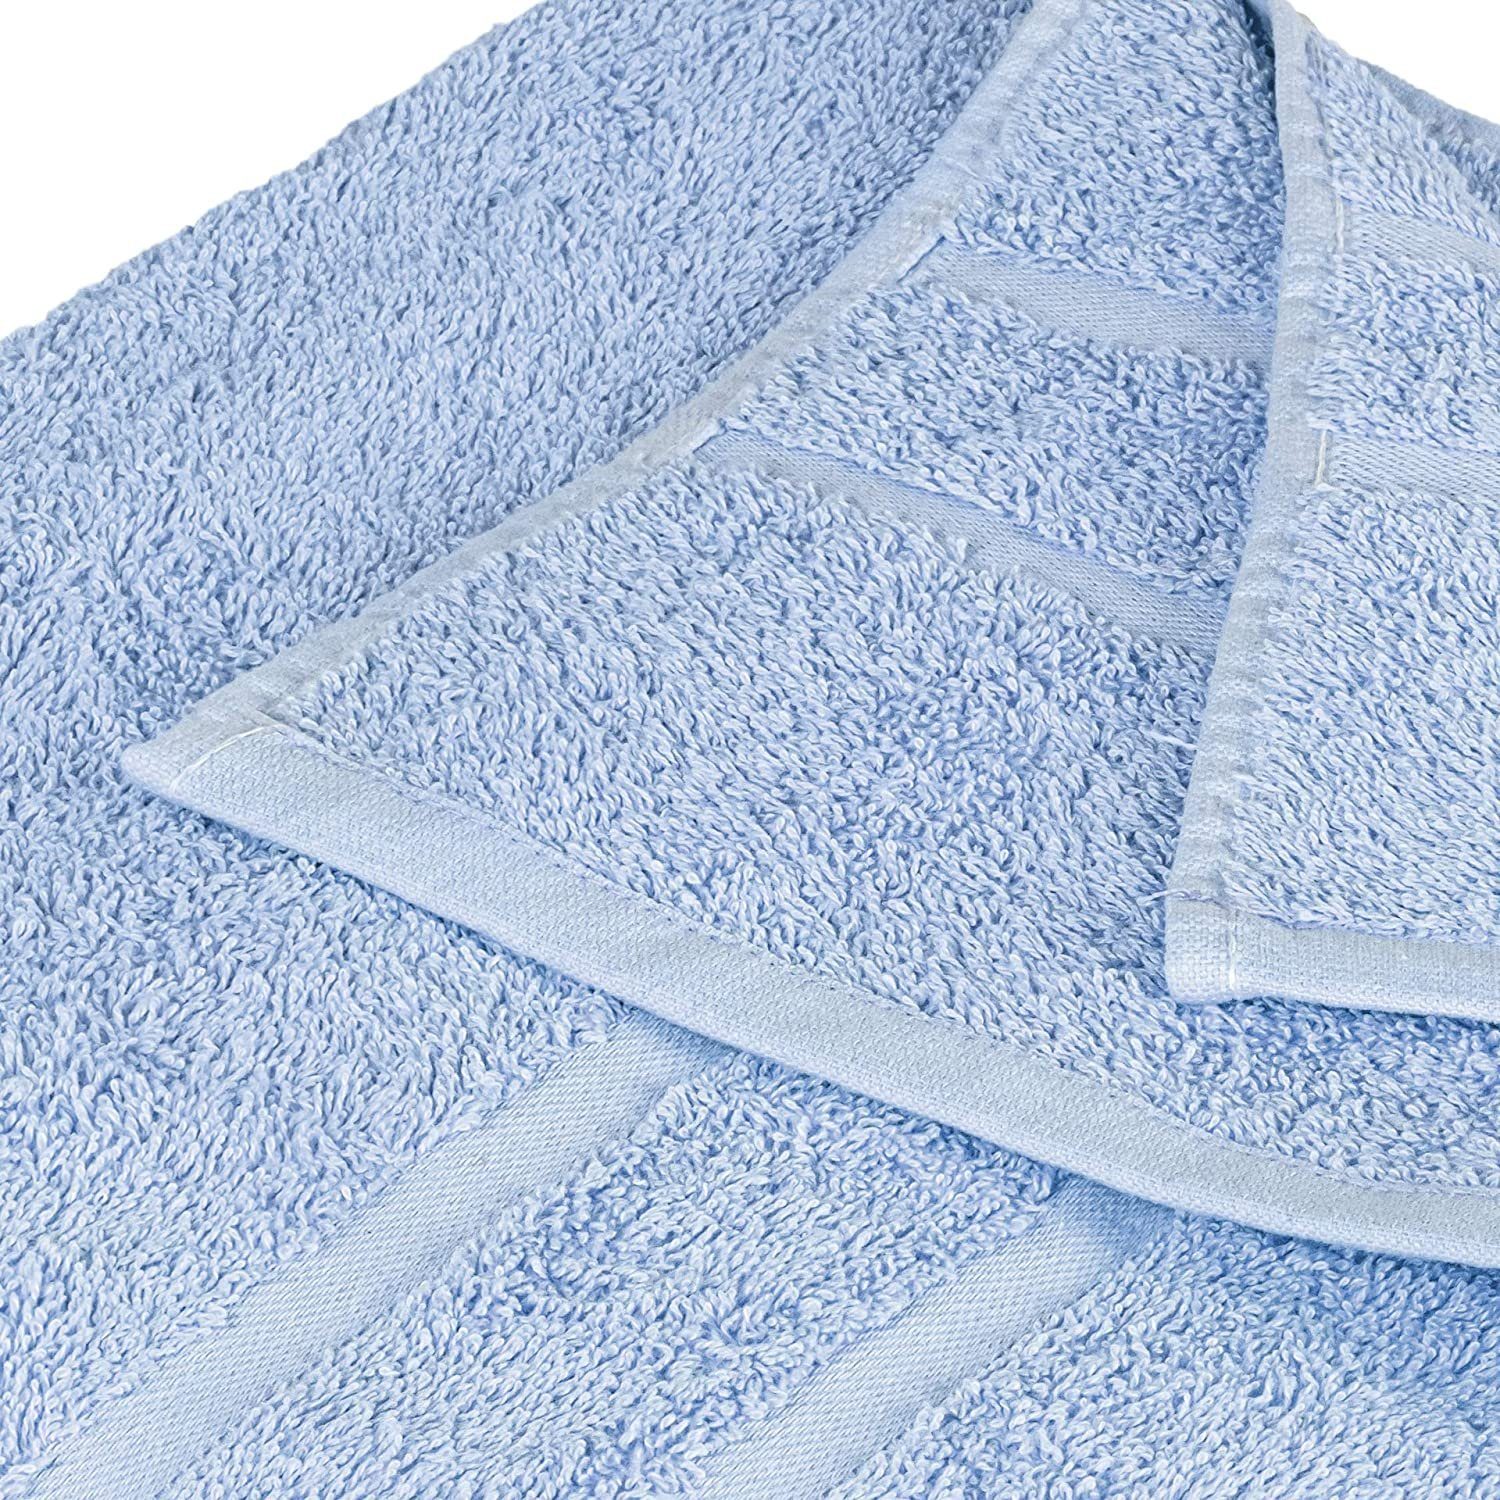 StickandShine Handtuch Handtücher in Hellblau Baumwolle Wahl zur 100% GSM Gästehandtücher Badetücher 500 Duschtücher Saunatücher